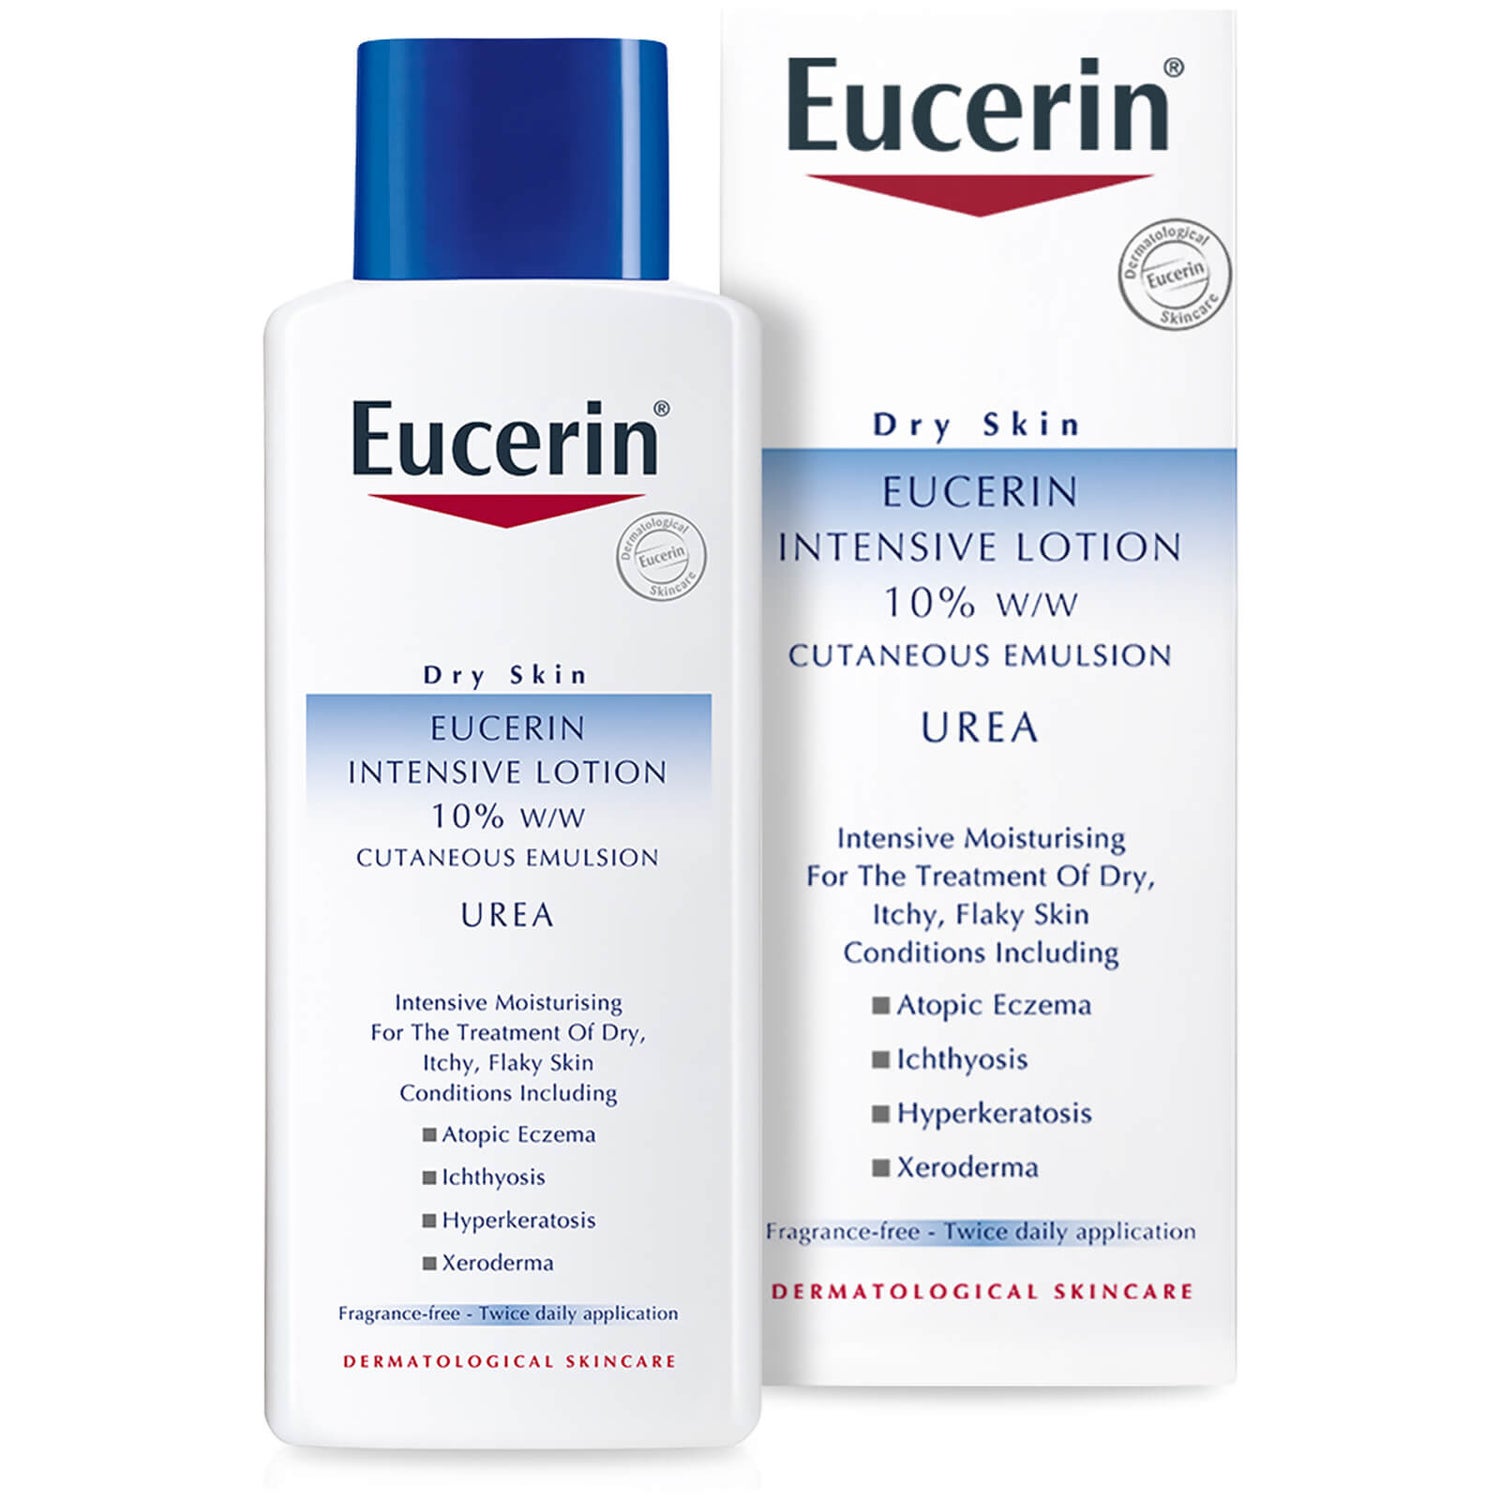 Eucerin® Dry Skin Intensive Lotion 10% w/w Cutaneous Emulsion Urea (250 - lookfantastic